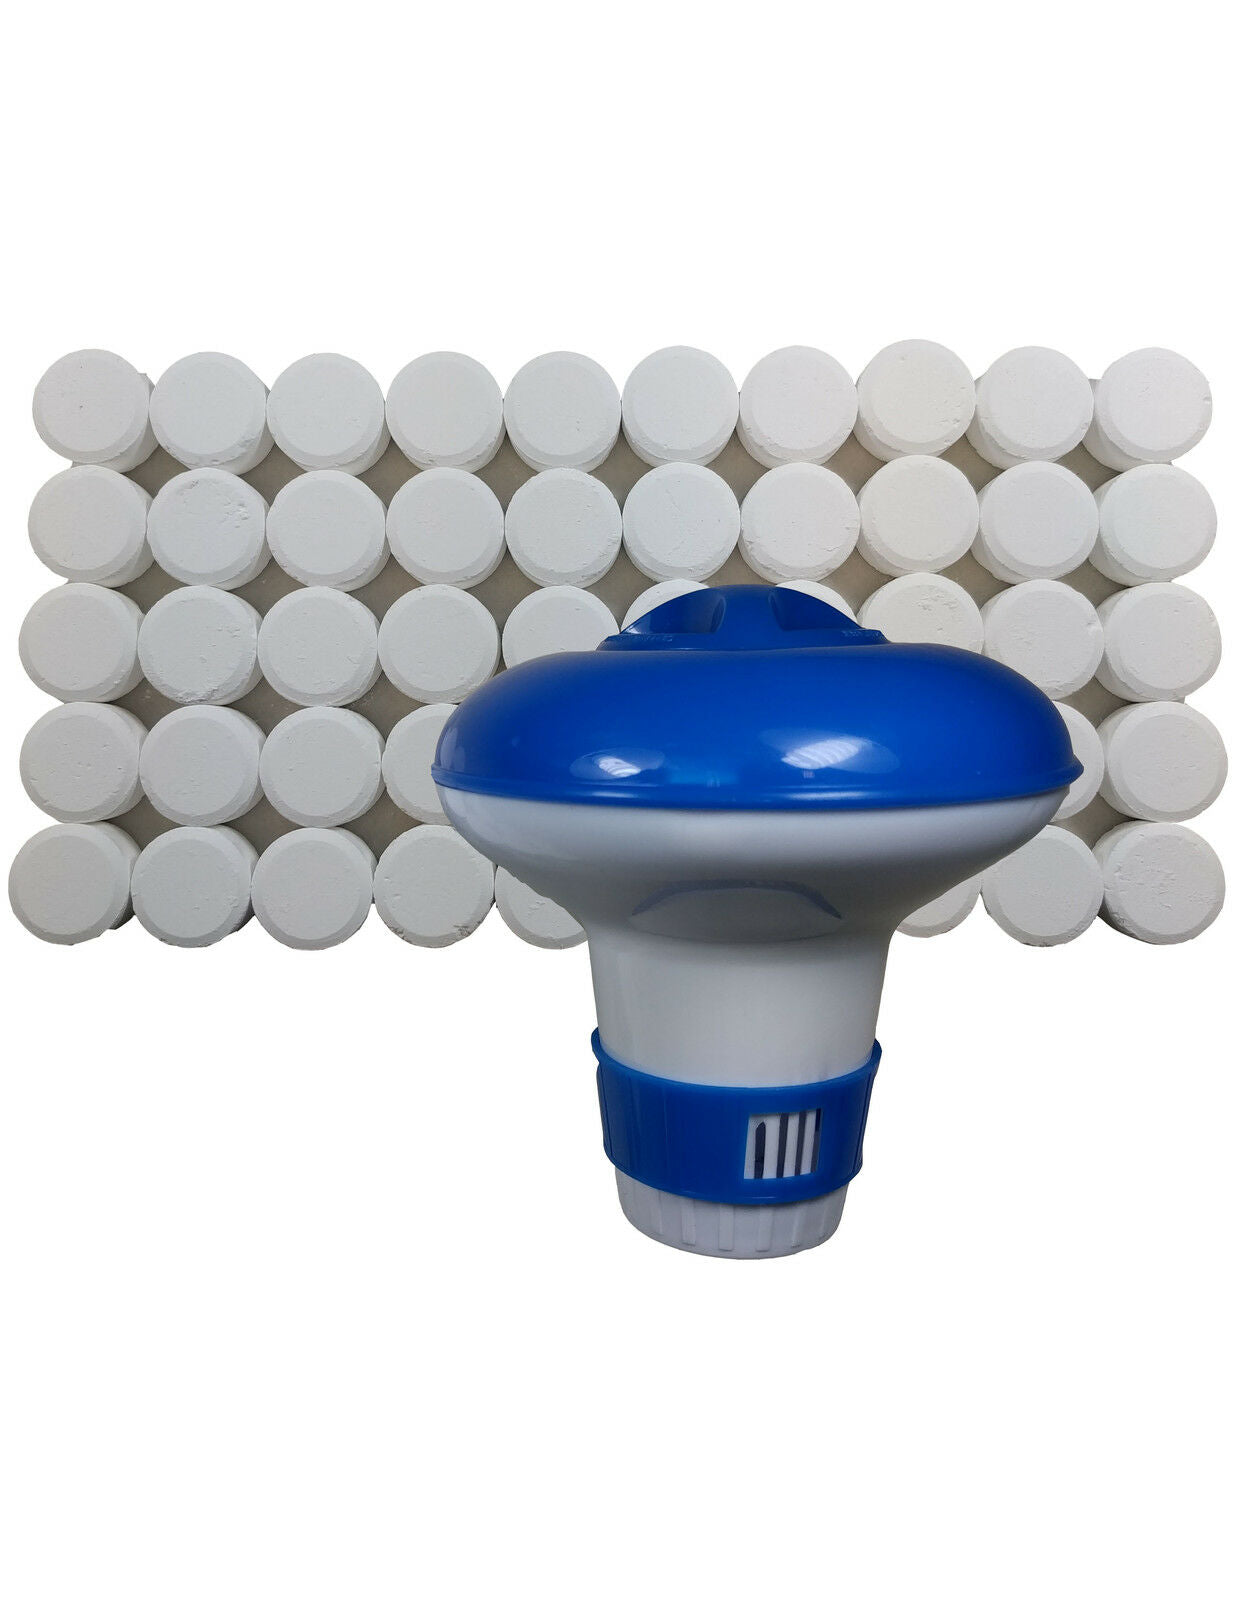 Floating Puck Dispenser for Mini Bromine or Chlorine Tablets